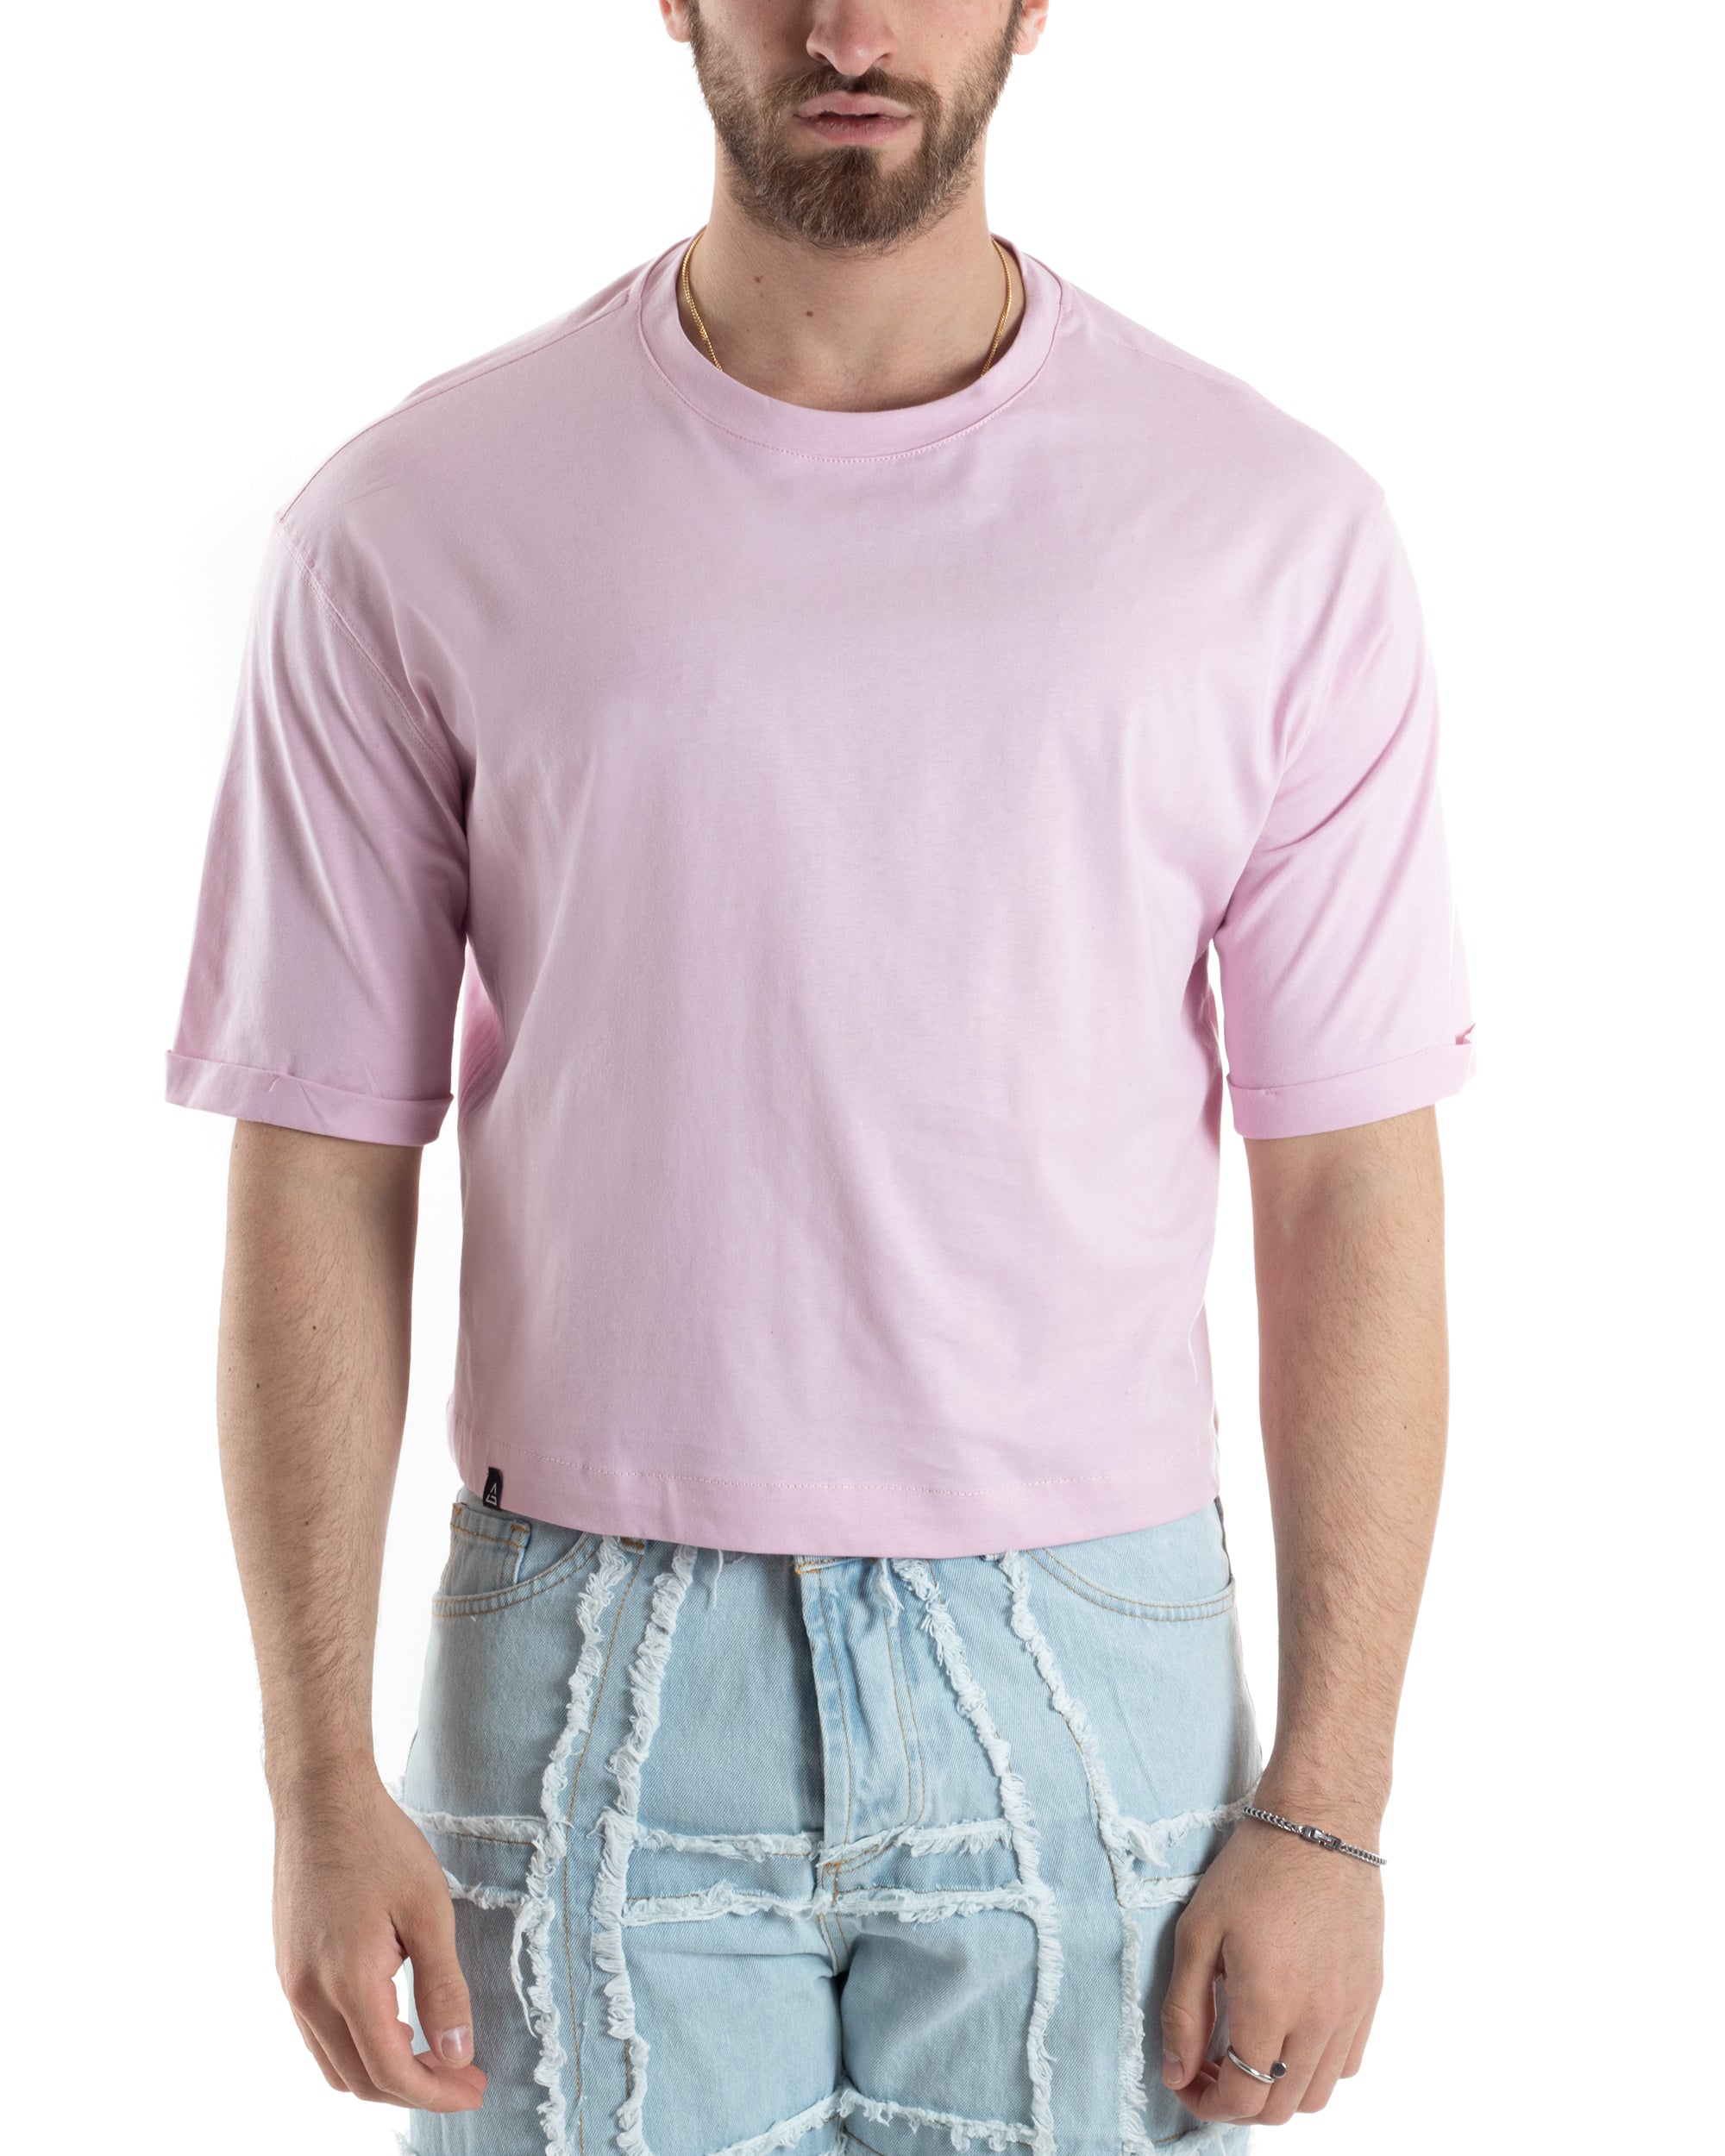 T-shirt Uomo Cropped Corta Boxy Fit Tinta Unita Rosa Casual GIOSAL-TS3003A